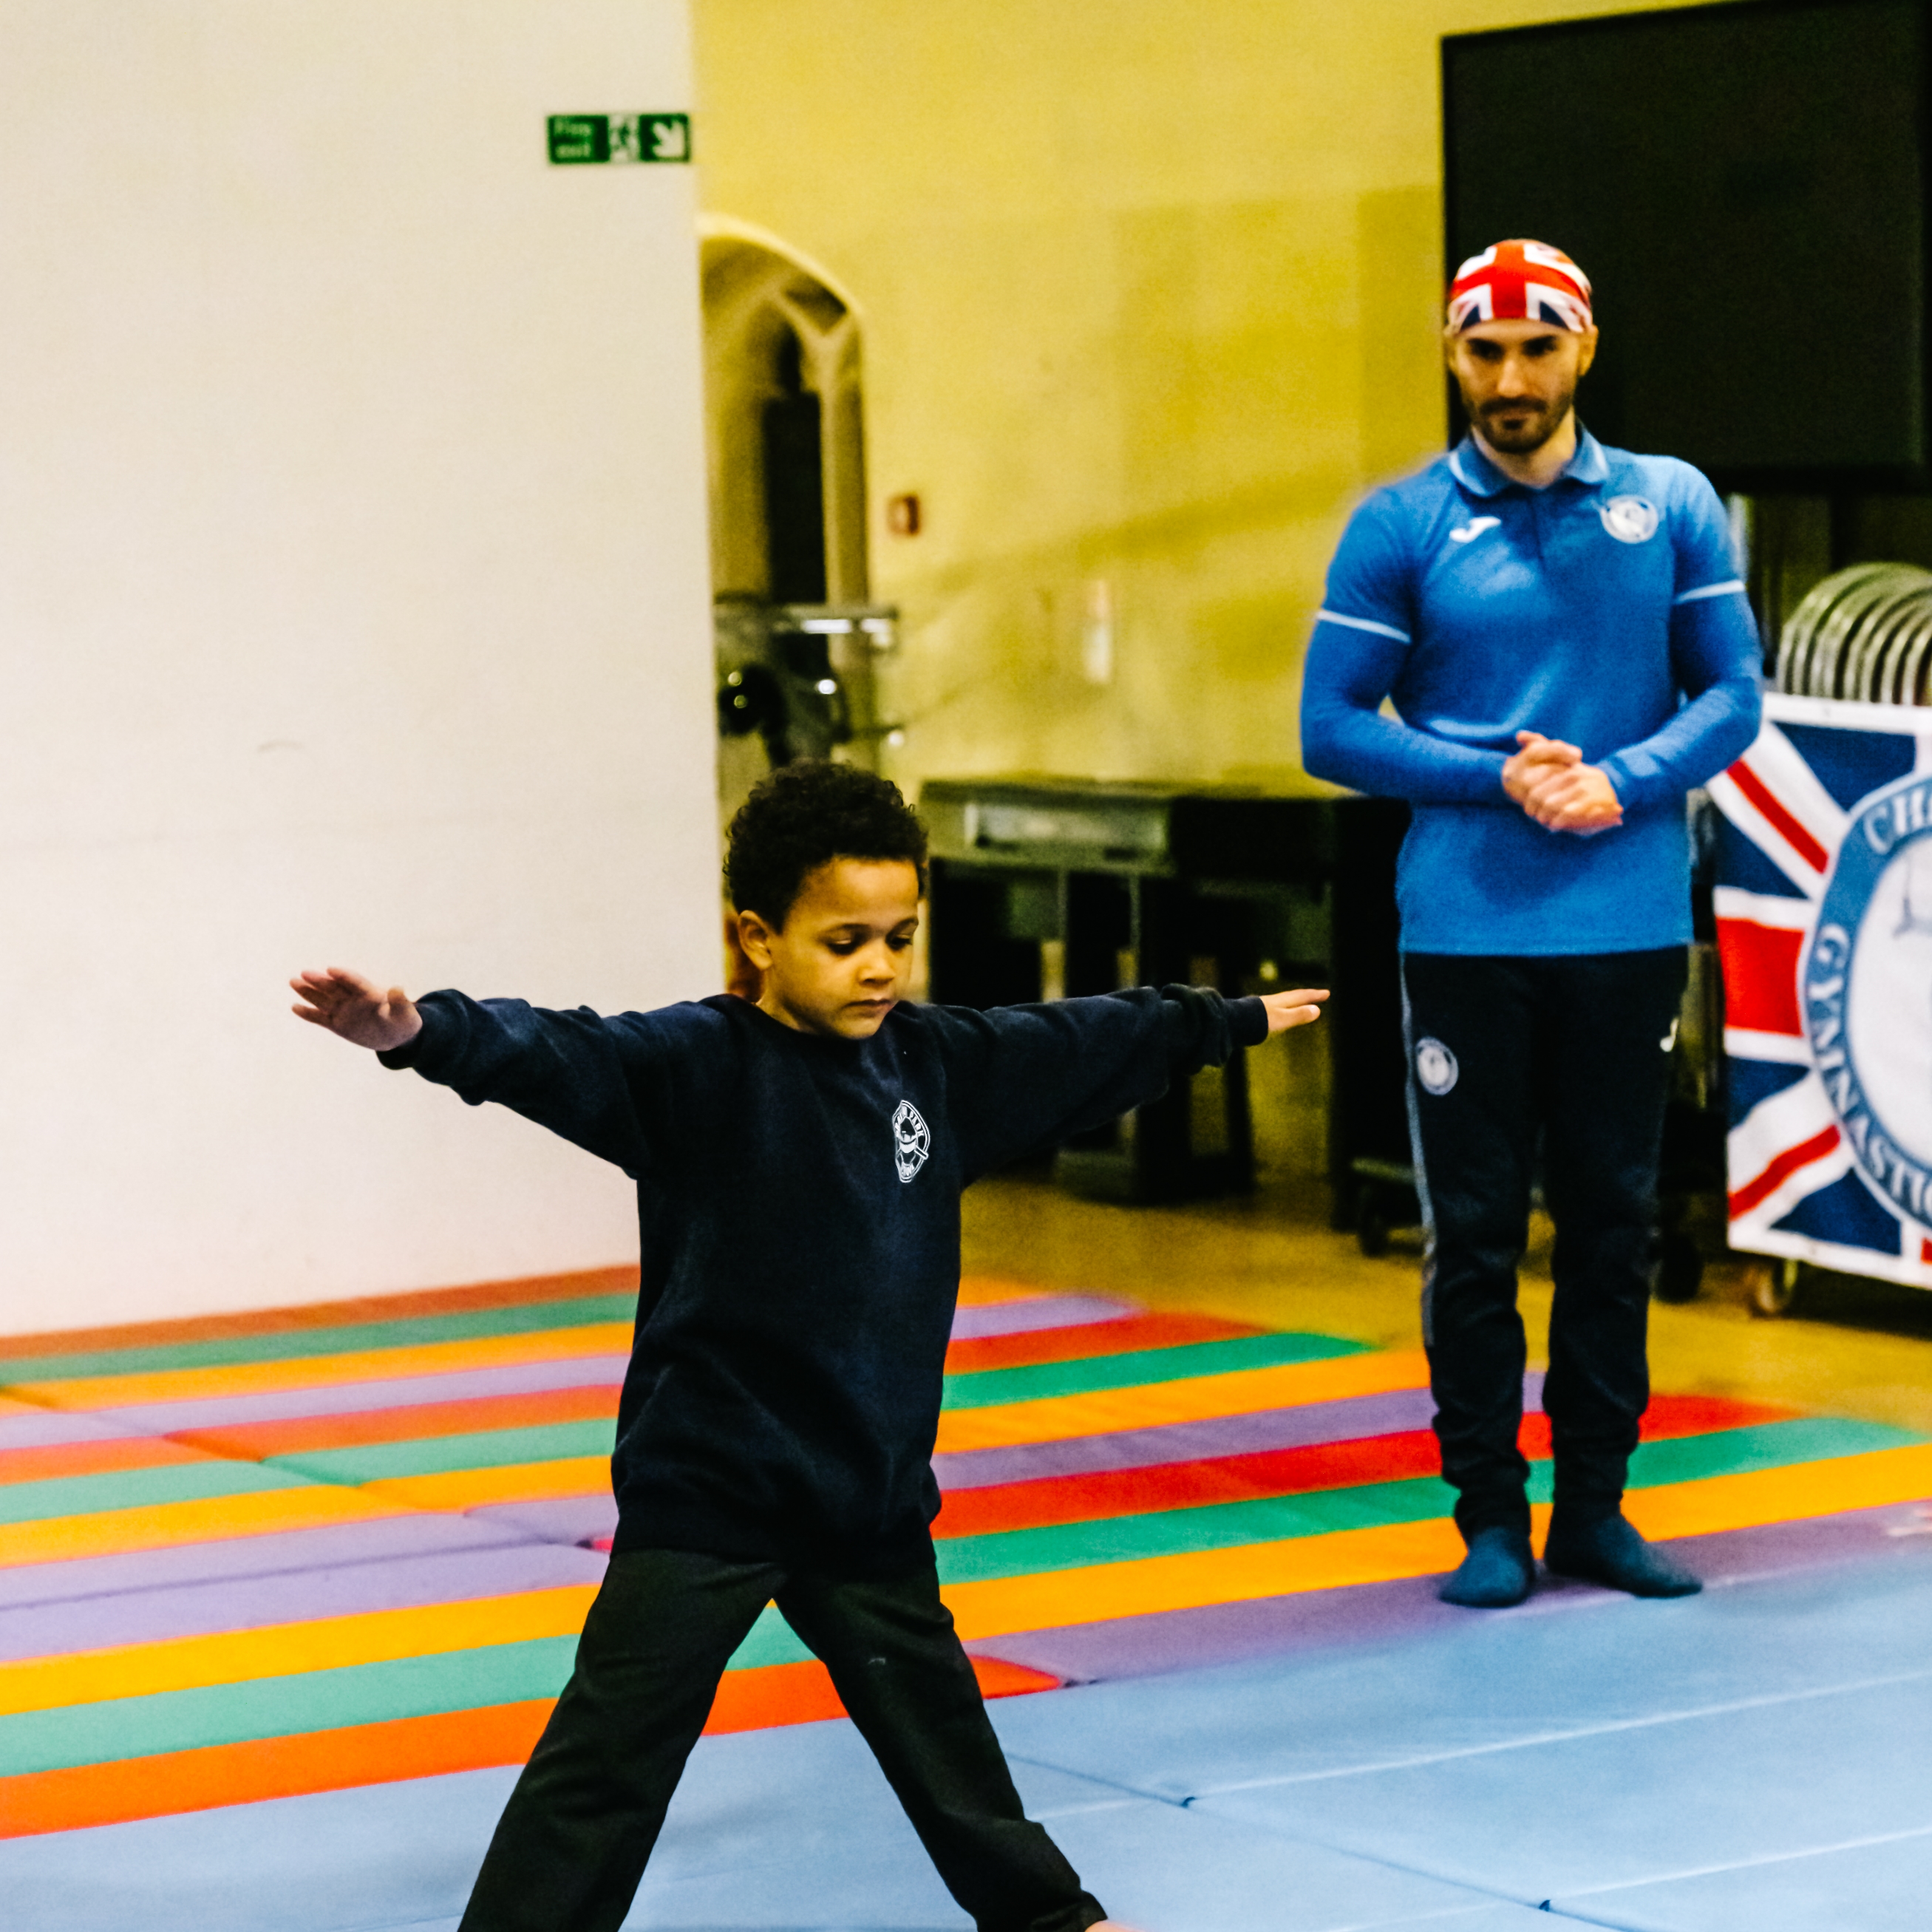 Gymnastics Classes for Children in Kensington and Chelsea